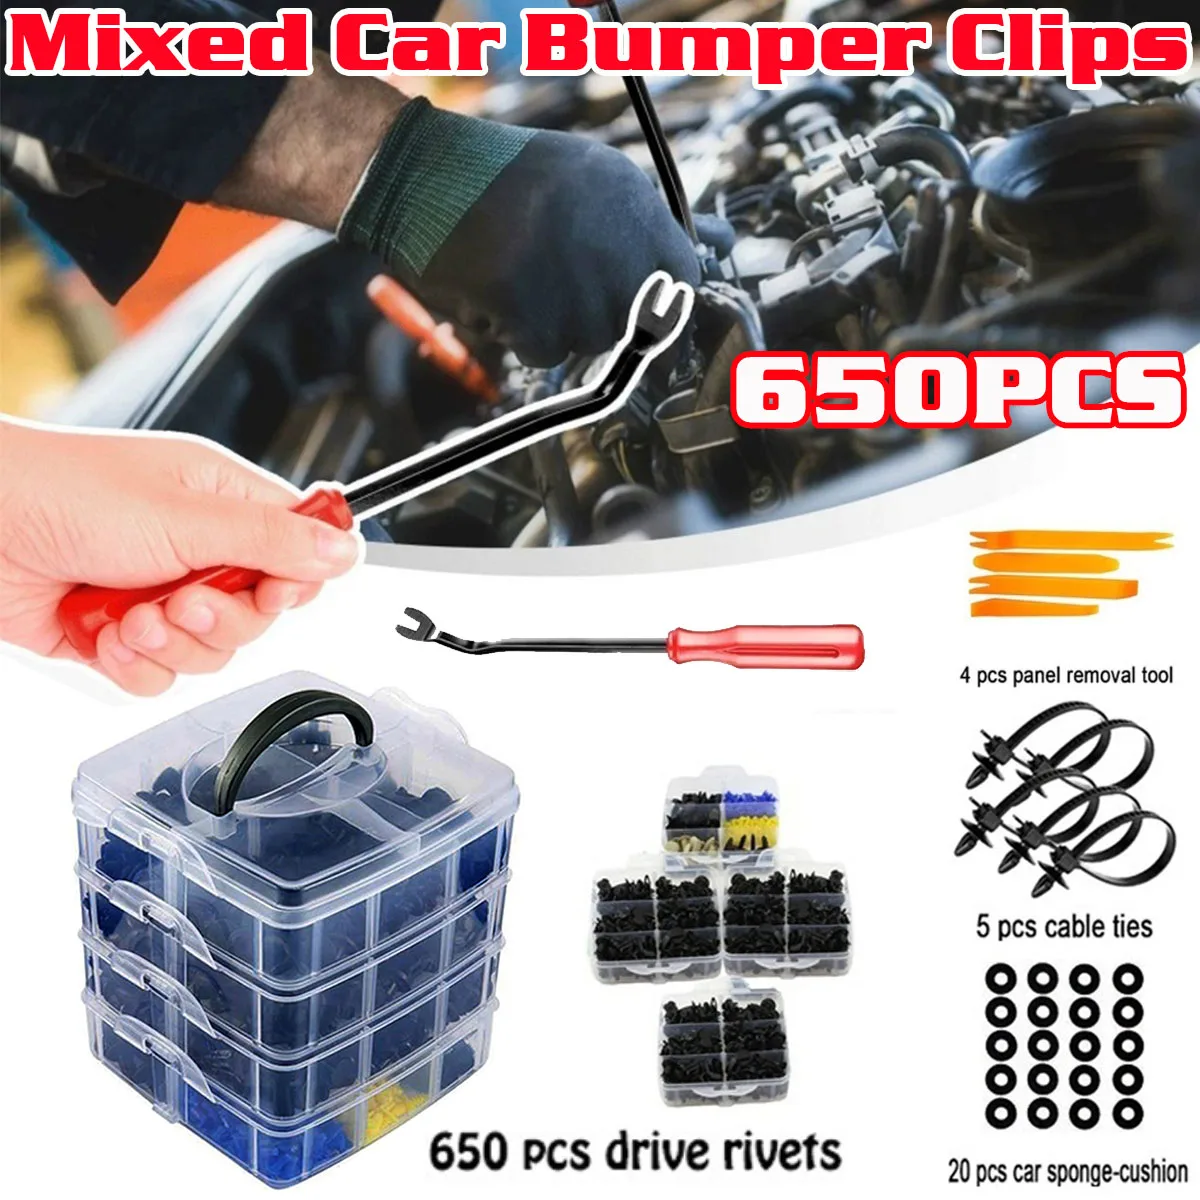 

650Pcs 620/415/500/100Pcs Plastic Car Body Push Pin Rivets Car Bumper Repair Fastener Clips With Screwdriver